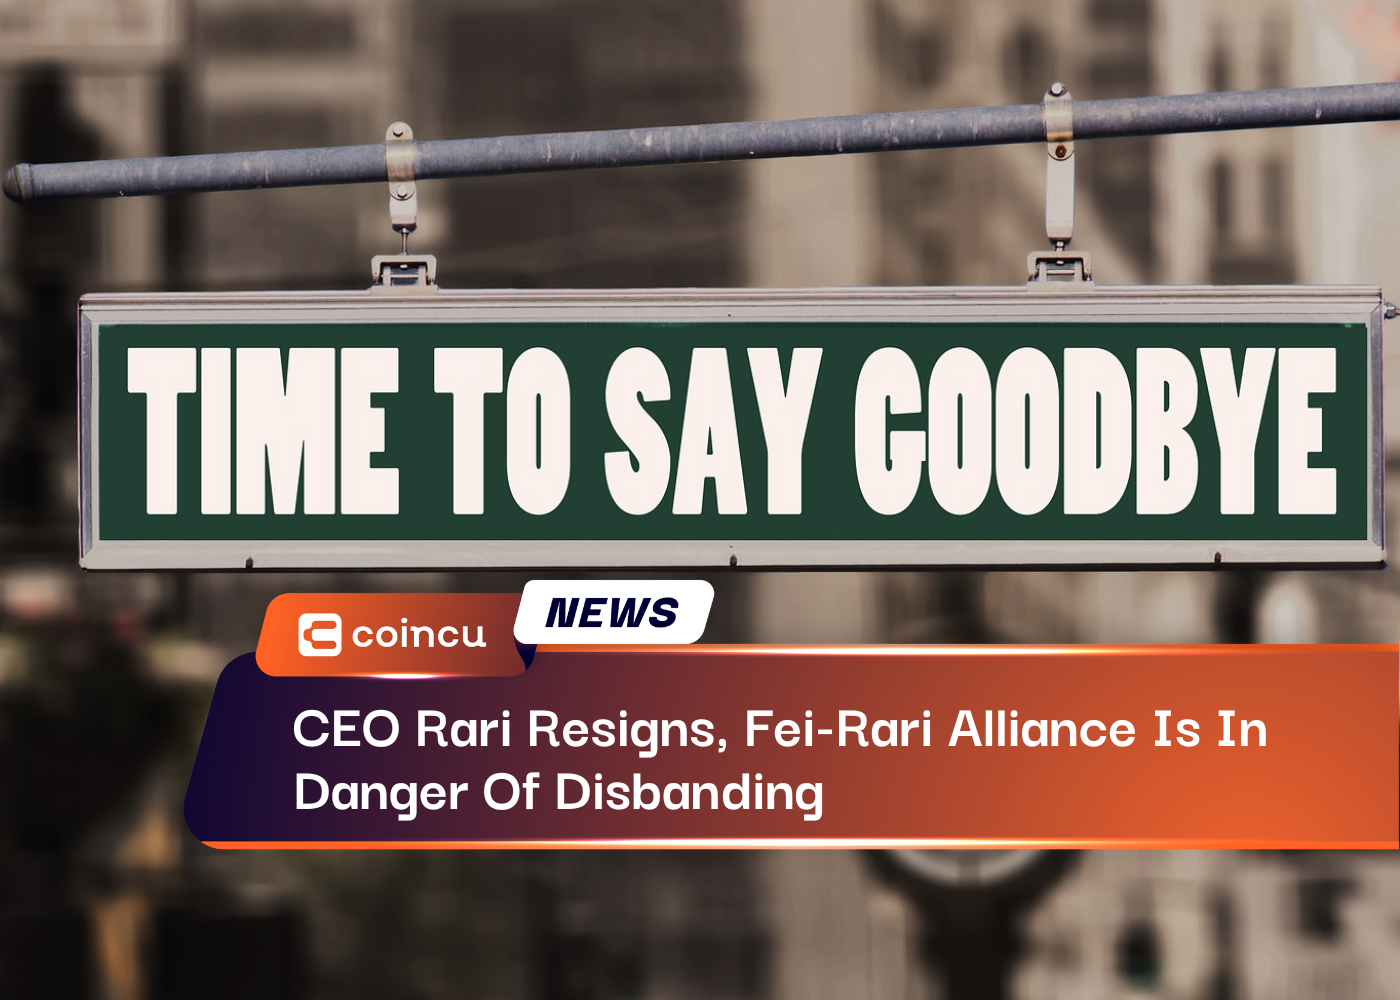 CEO Rari Resigns, Fei-Rari Alliance Is In Danger Of Disbanding